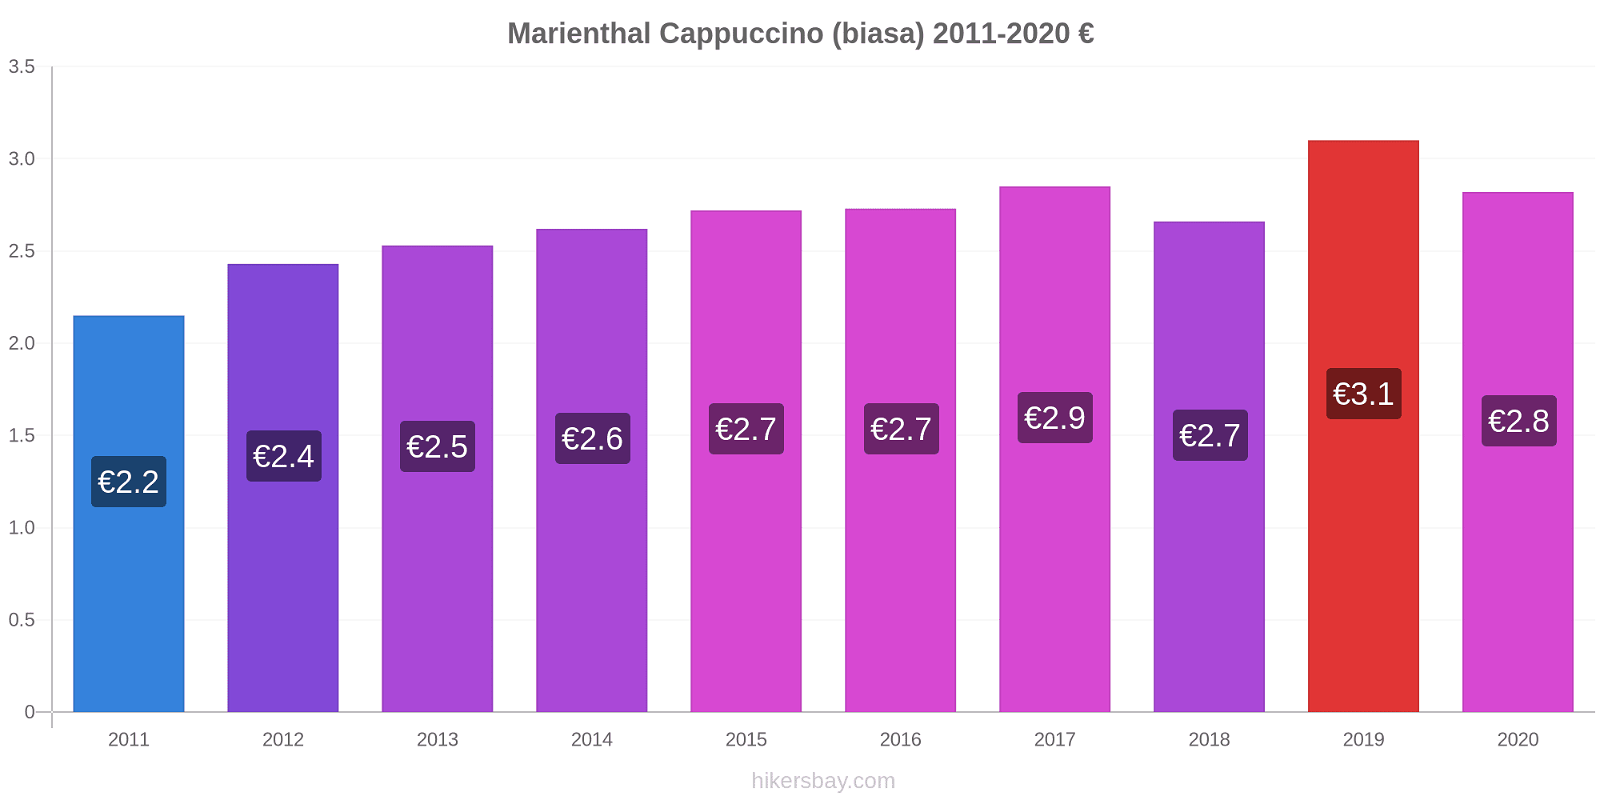 Marienthal perubahan harga Cappuccino (biasa) hikersbay.com